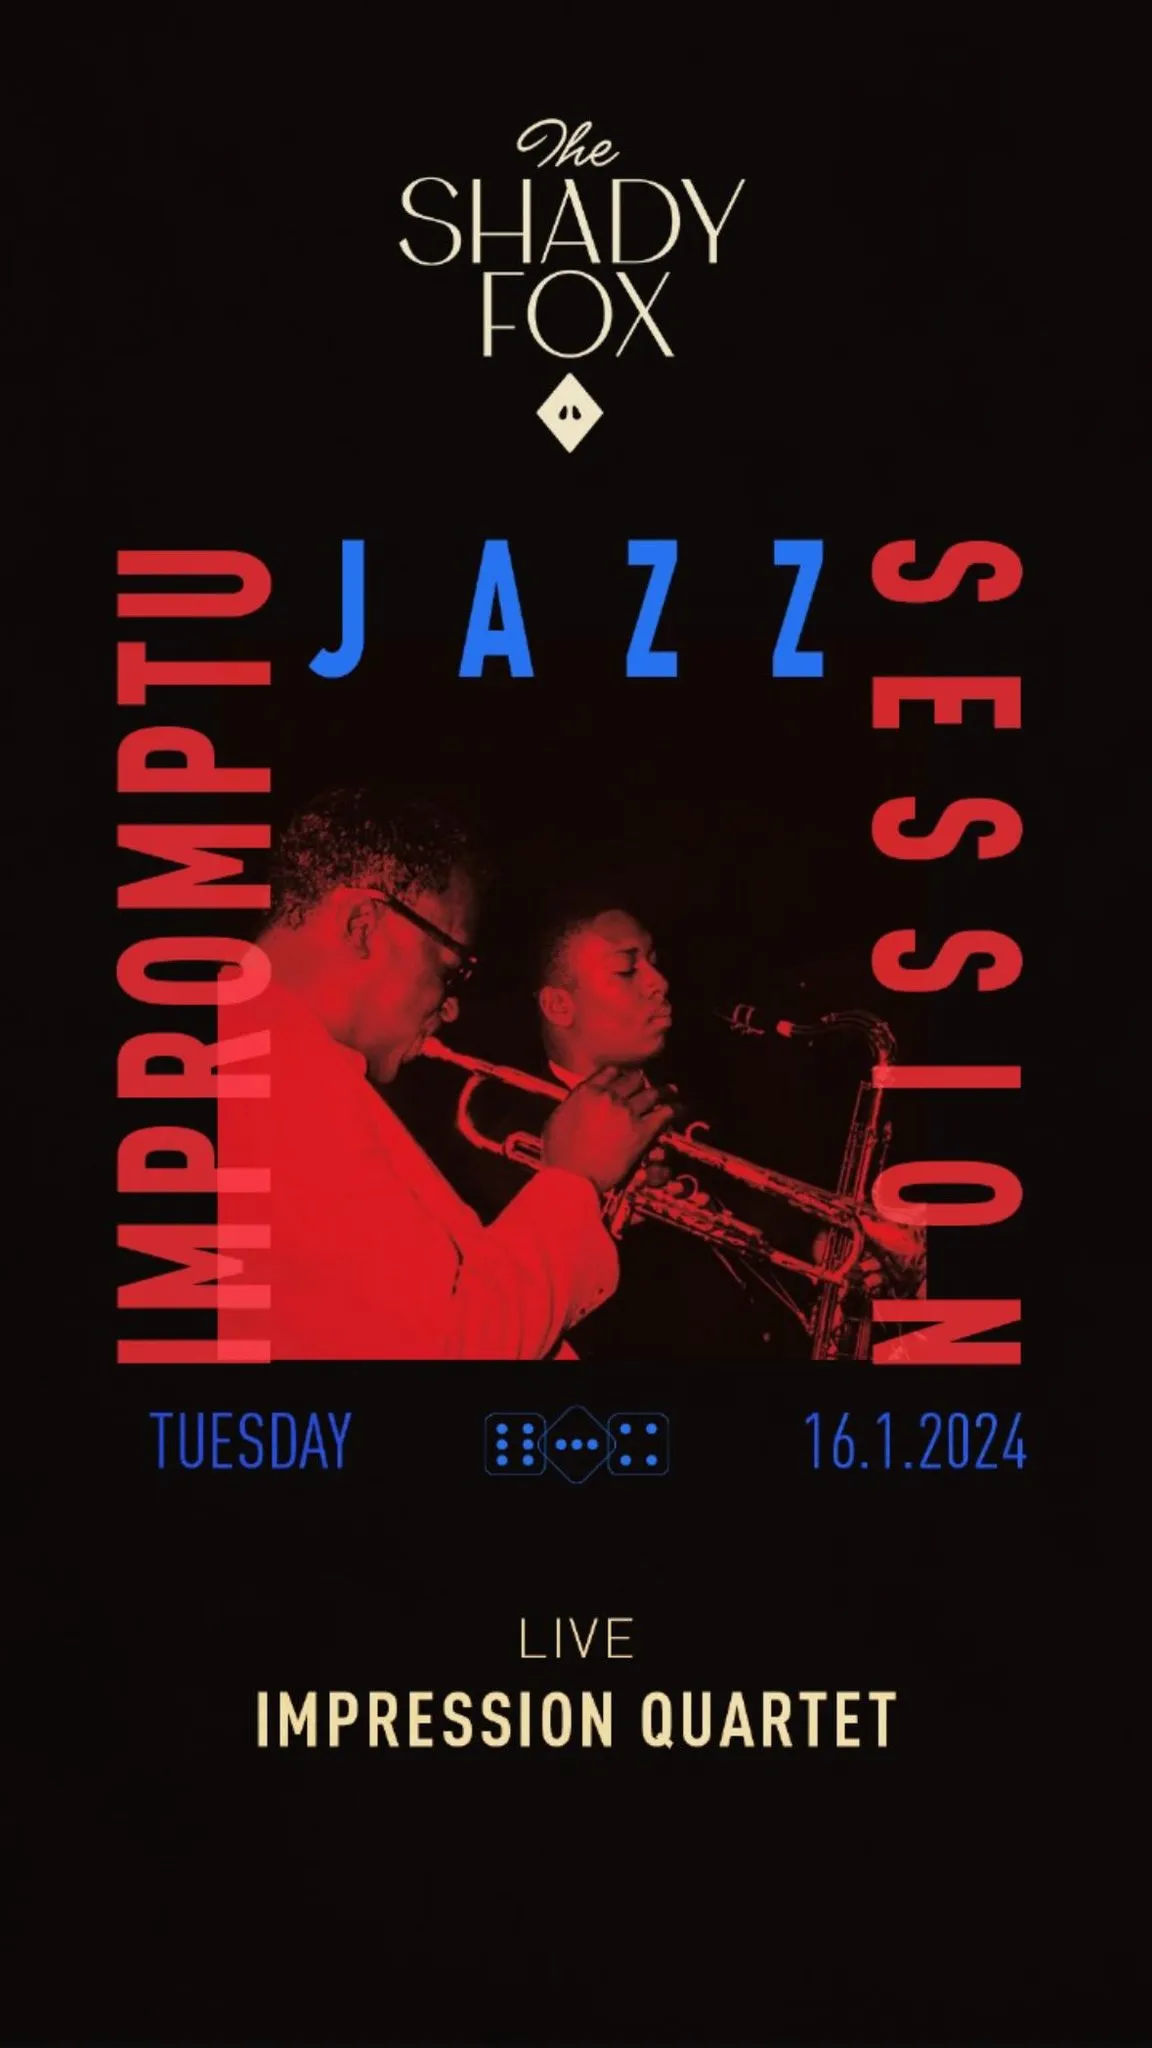 Live music Impromptu Jazz Session at Shady Fox 232